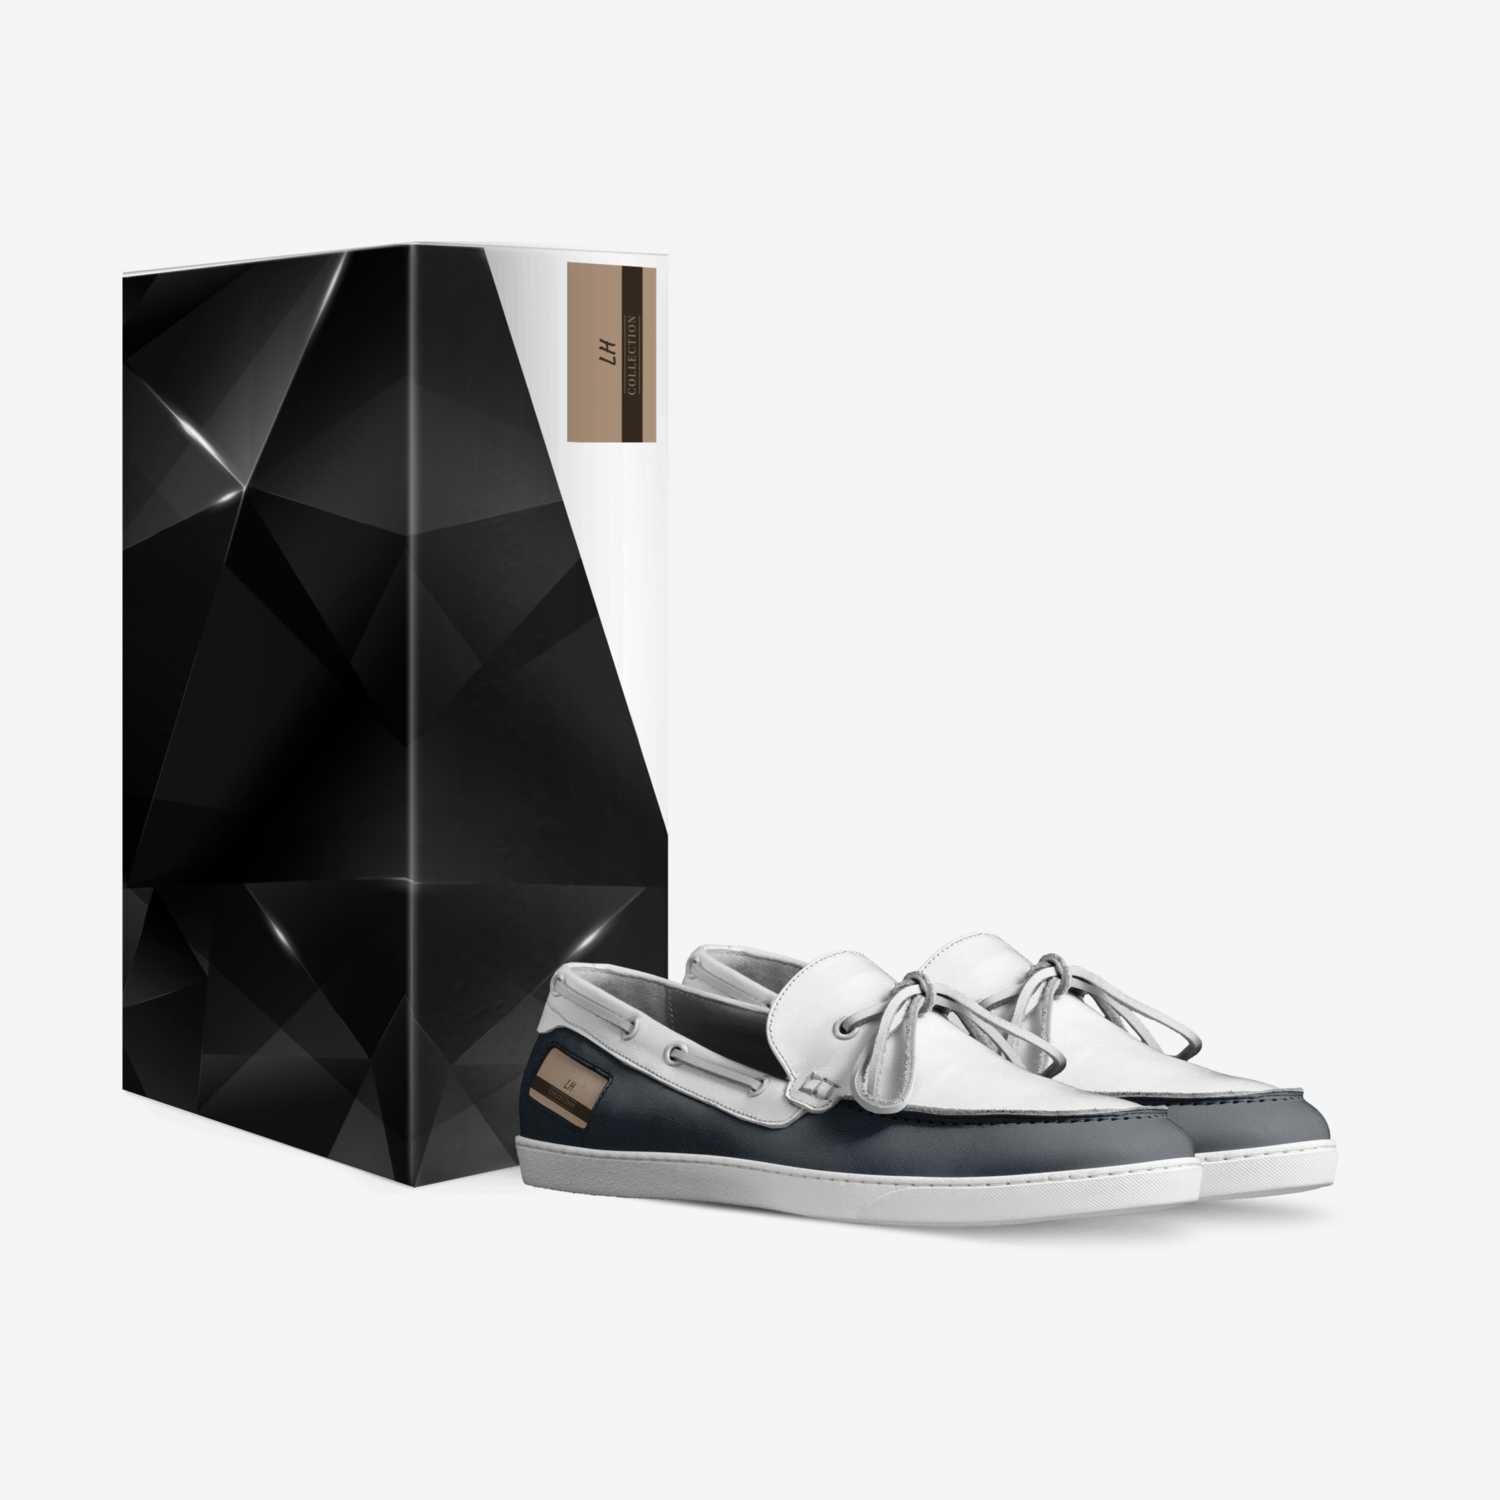 Luke Hawkins custom made in Italy shoes by Luke Miachel Hawkins | Box view